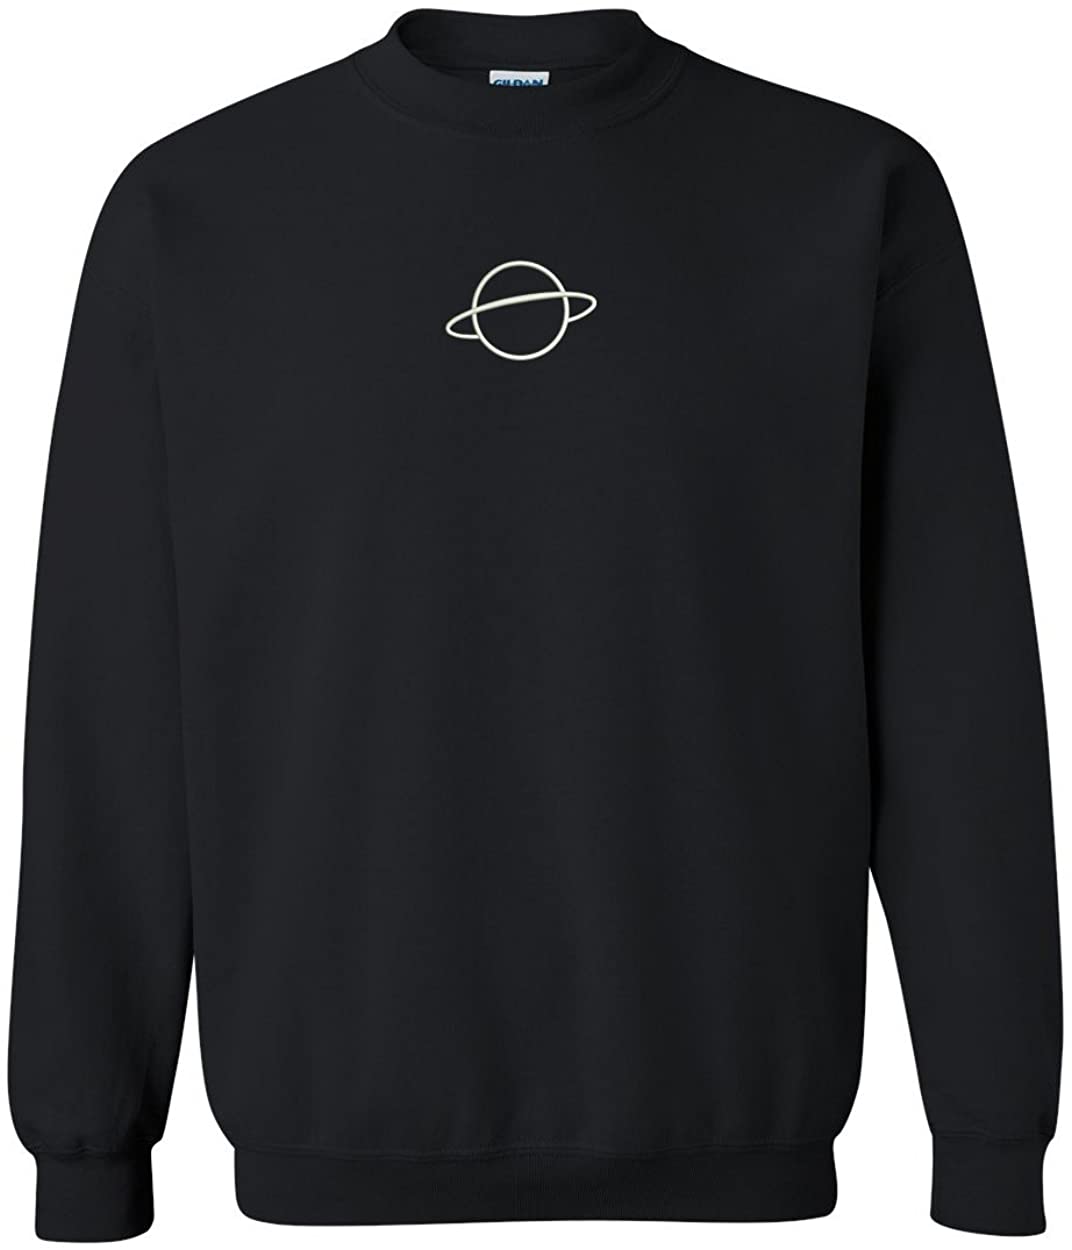 Trendy Apparel Shop Planet Embroidered Crewneck Sweatshirt - Black - 2XL